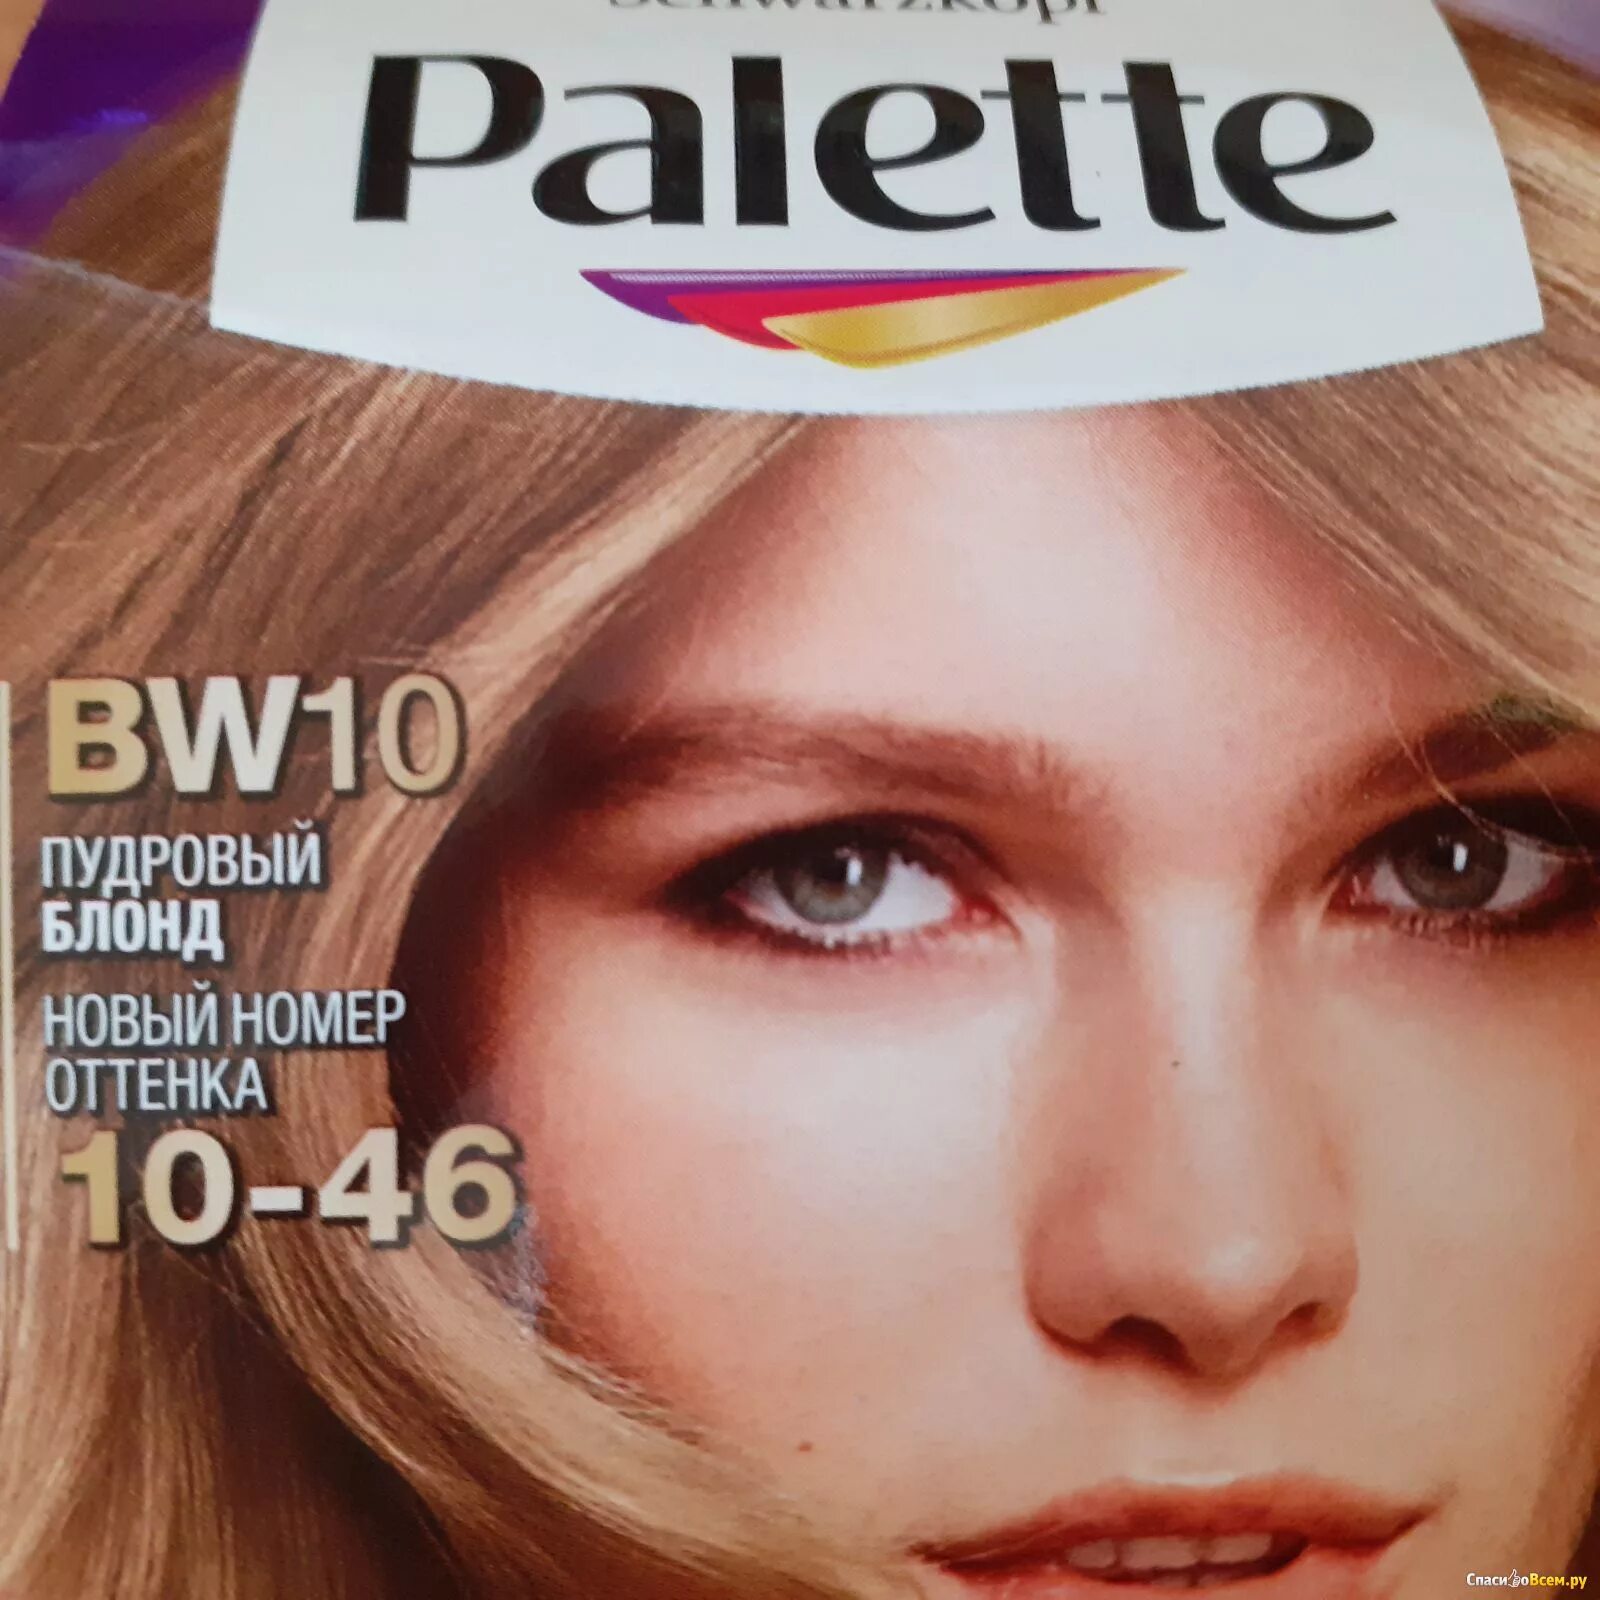 Palette bw10. Краска палетт BW 10 - 46. Паллет 10-46. Schwarzkopf Palette краска для волос bw10.